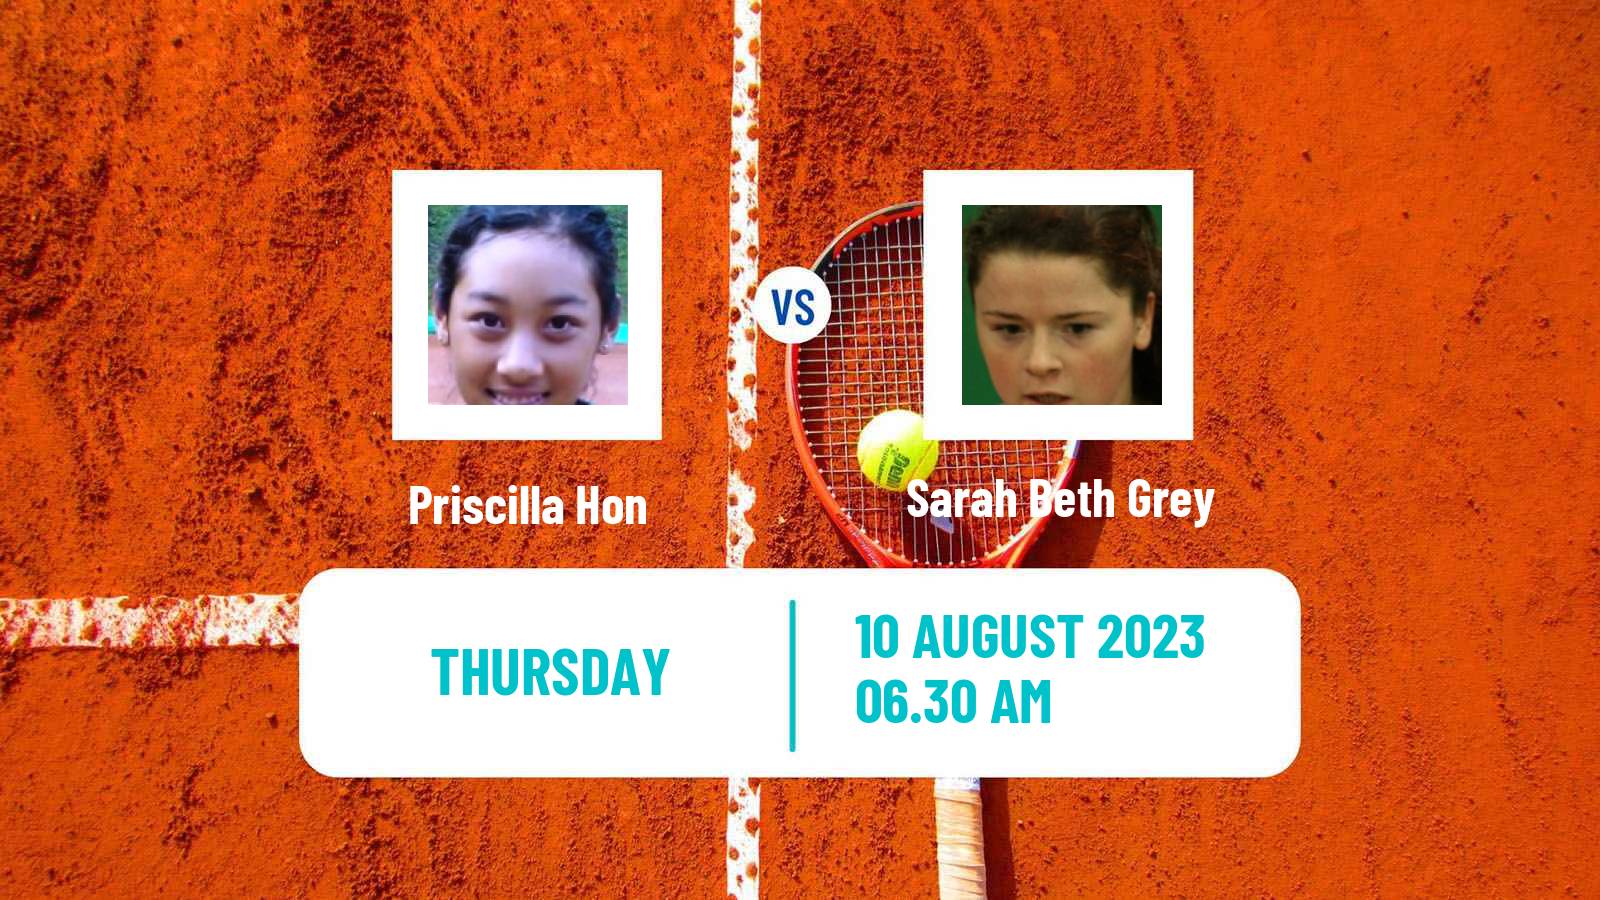 Tennis ITF W25 Roehampton 3 Women Priscilla Hon - Sarah Beth Grey